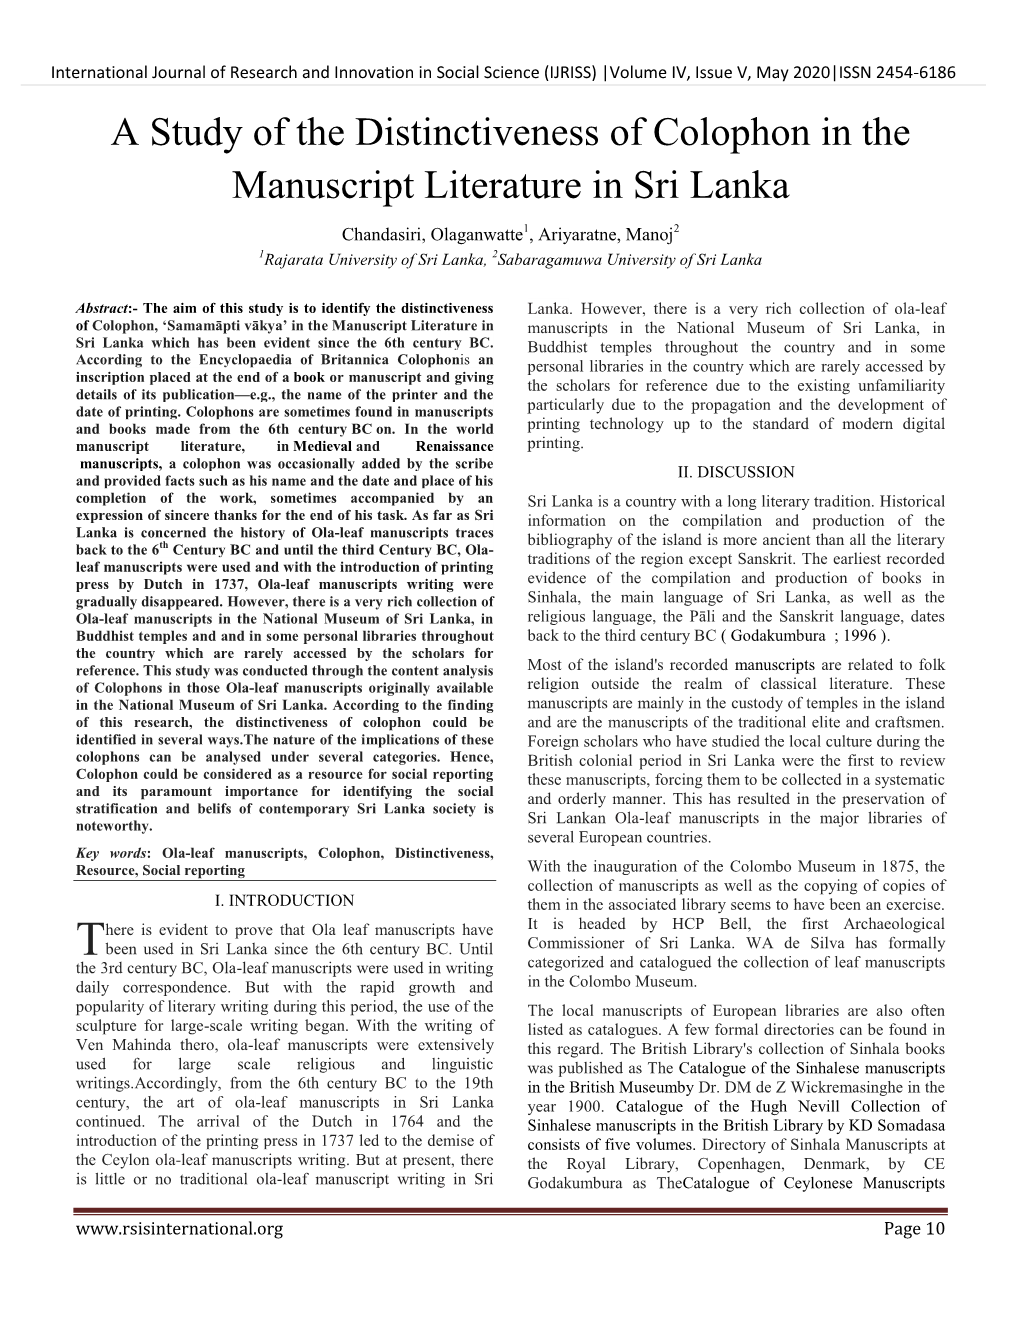 A Study of the Distinctiveness of Colophon in the Manuscript Literature in Sri Lanka